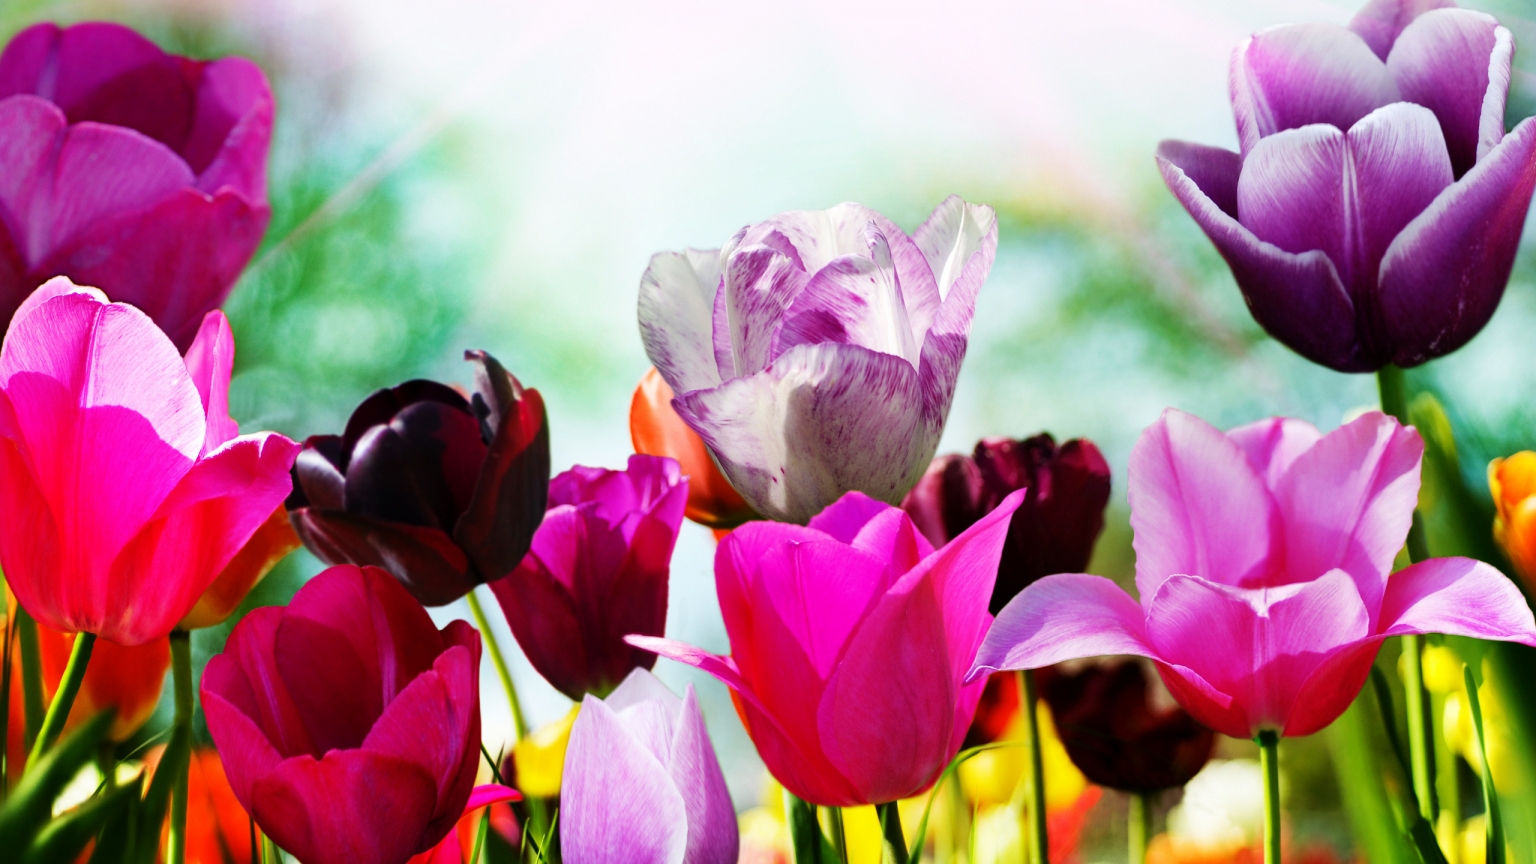 Superb Spring Tulips for 1536 x 864 HDTV resolution